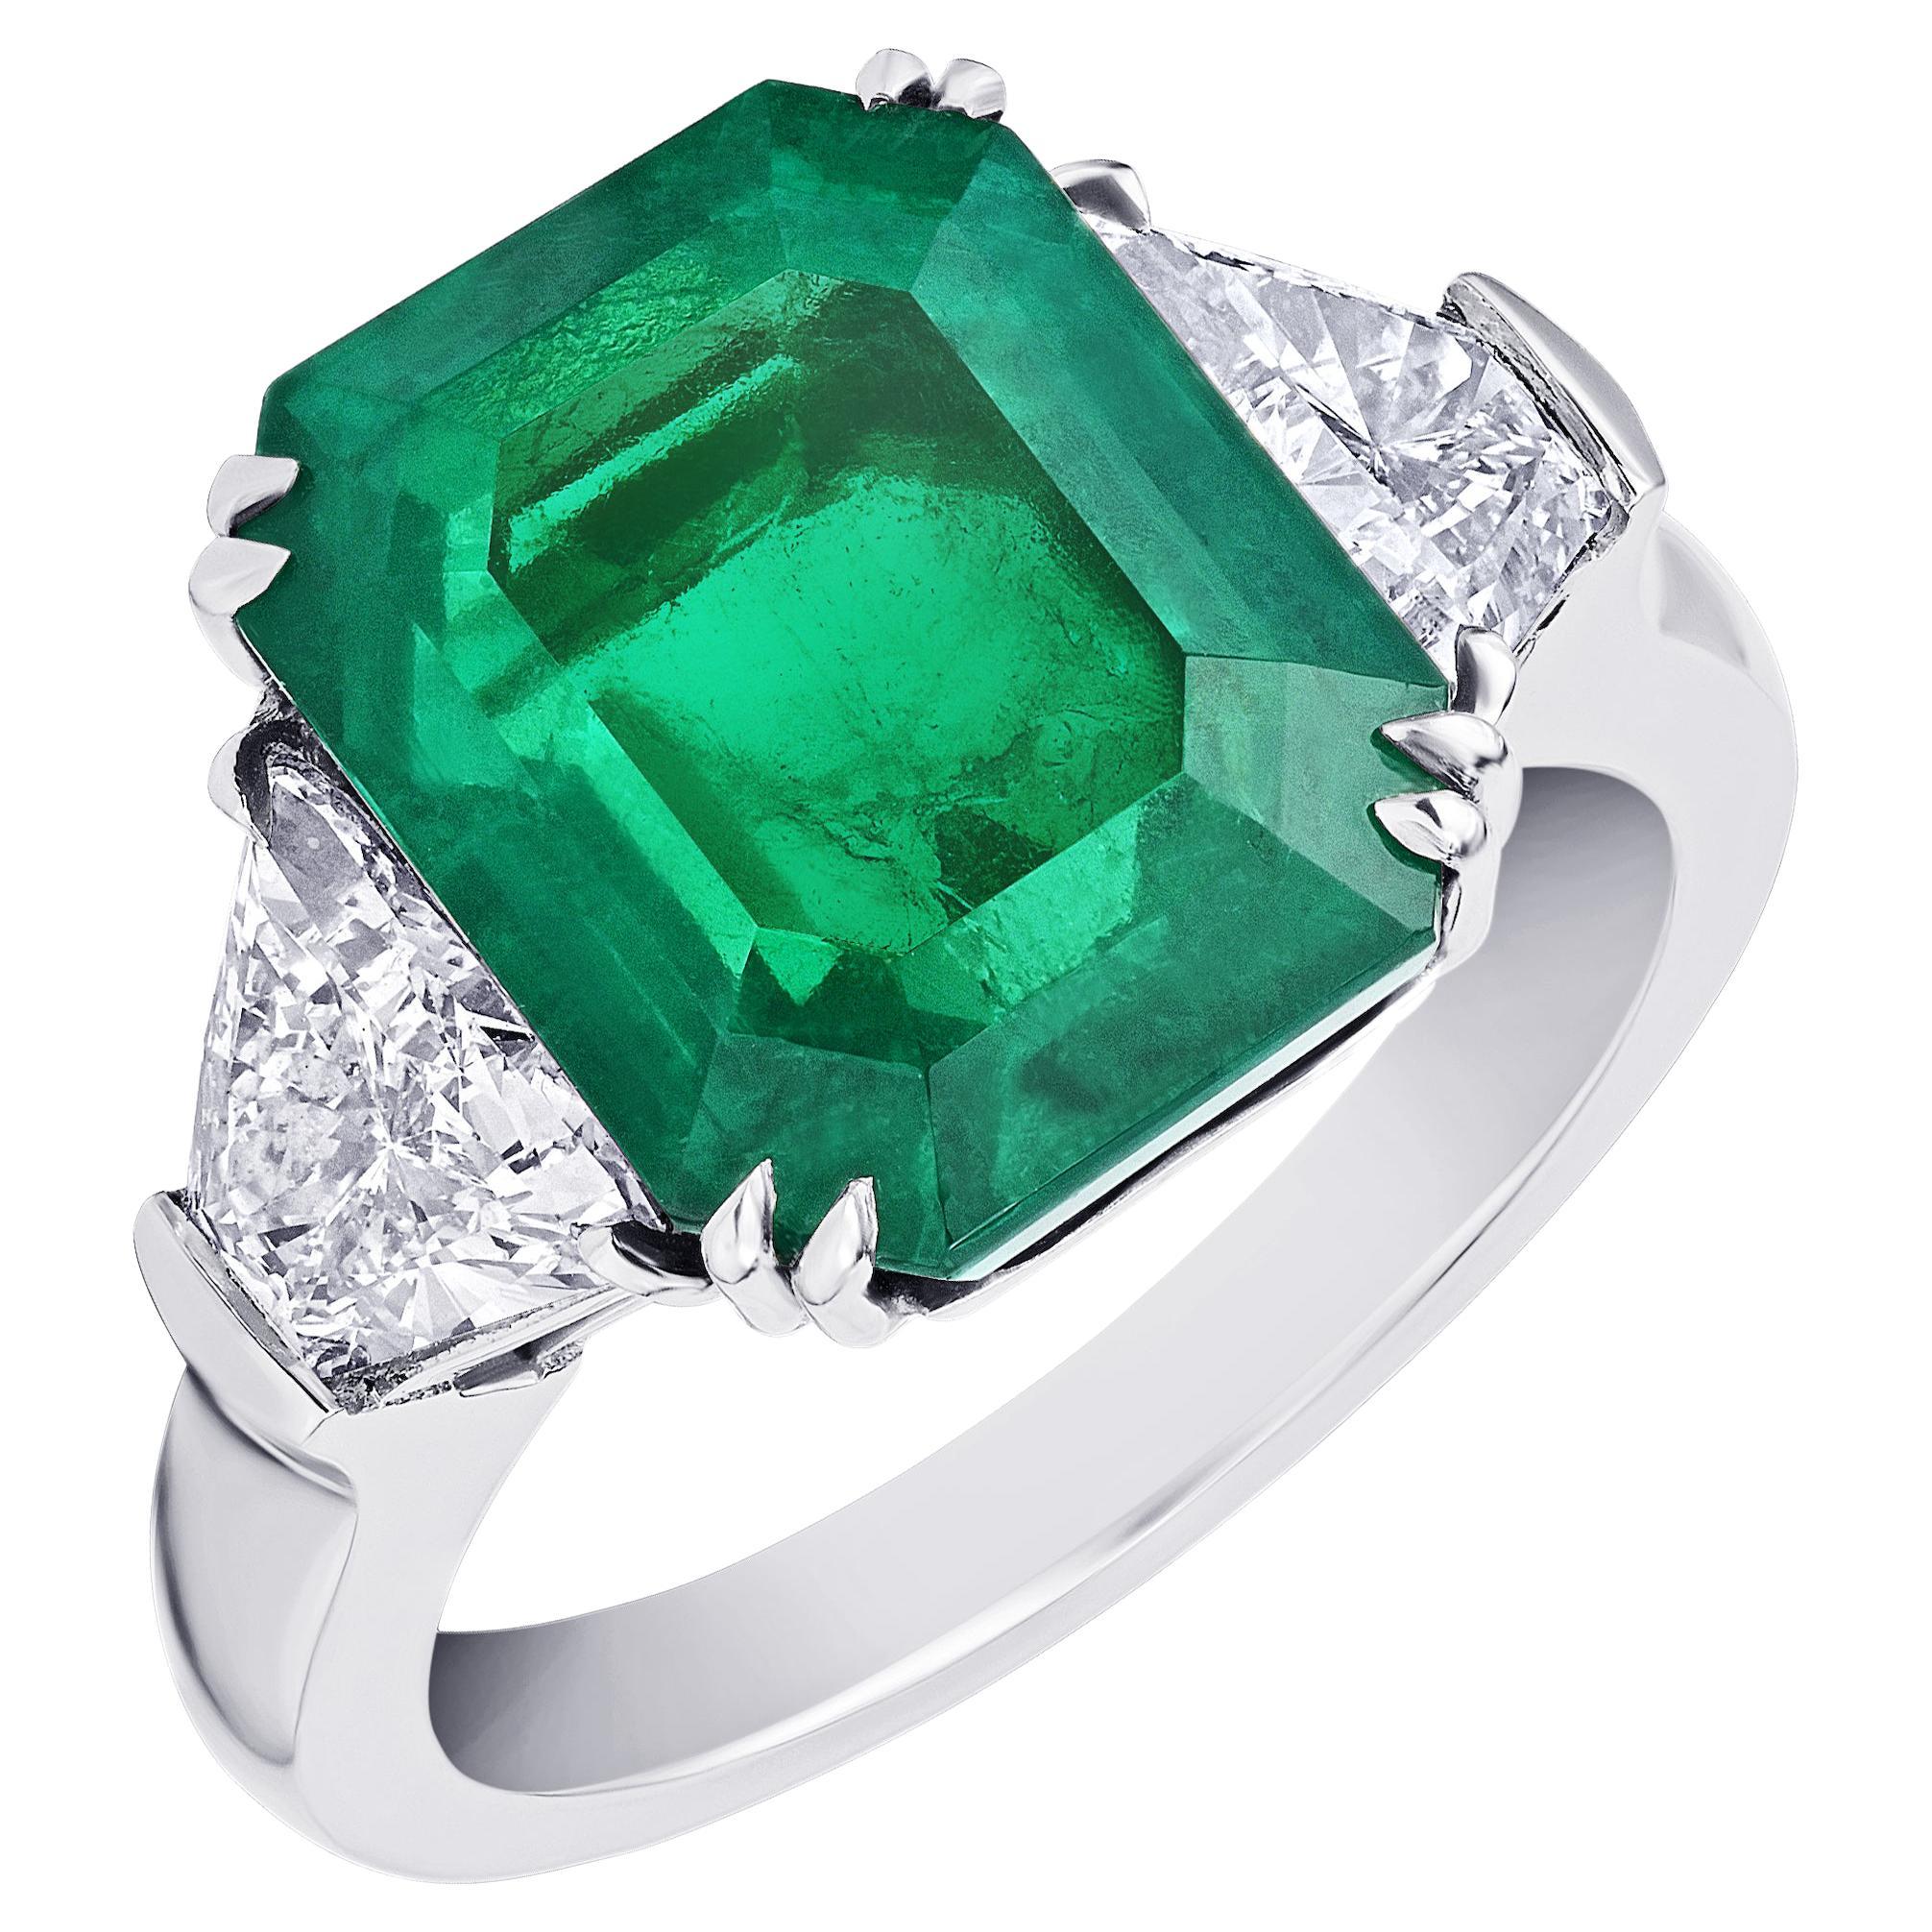 7 Carat Colombian Emerald Diamond Engagement Ring